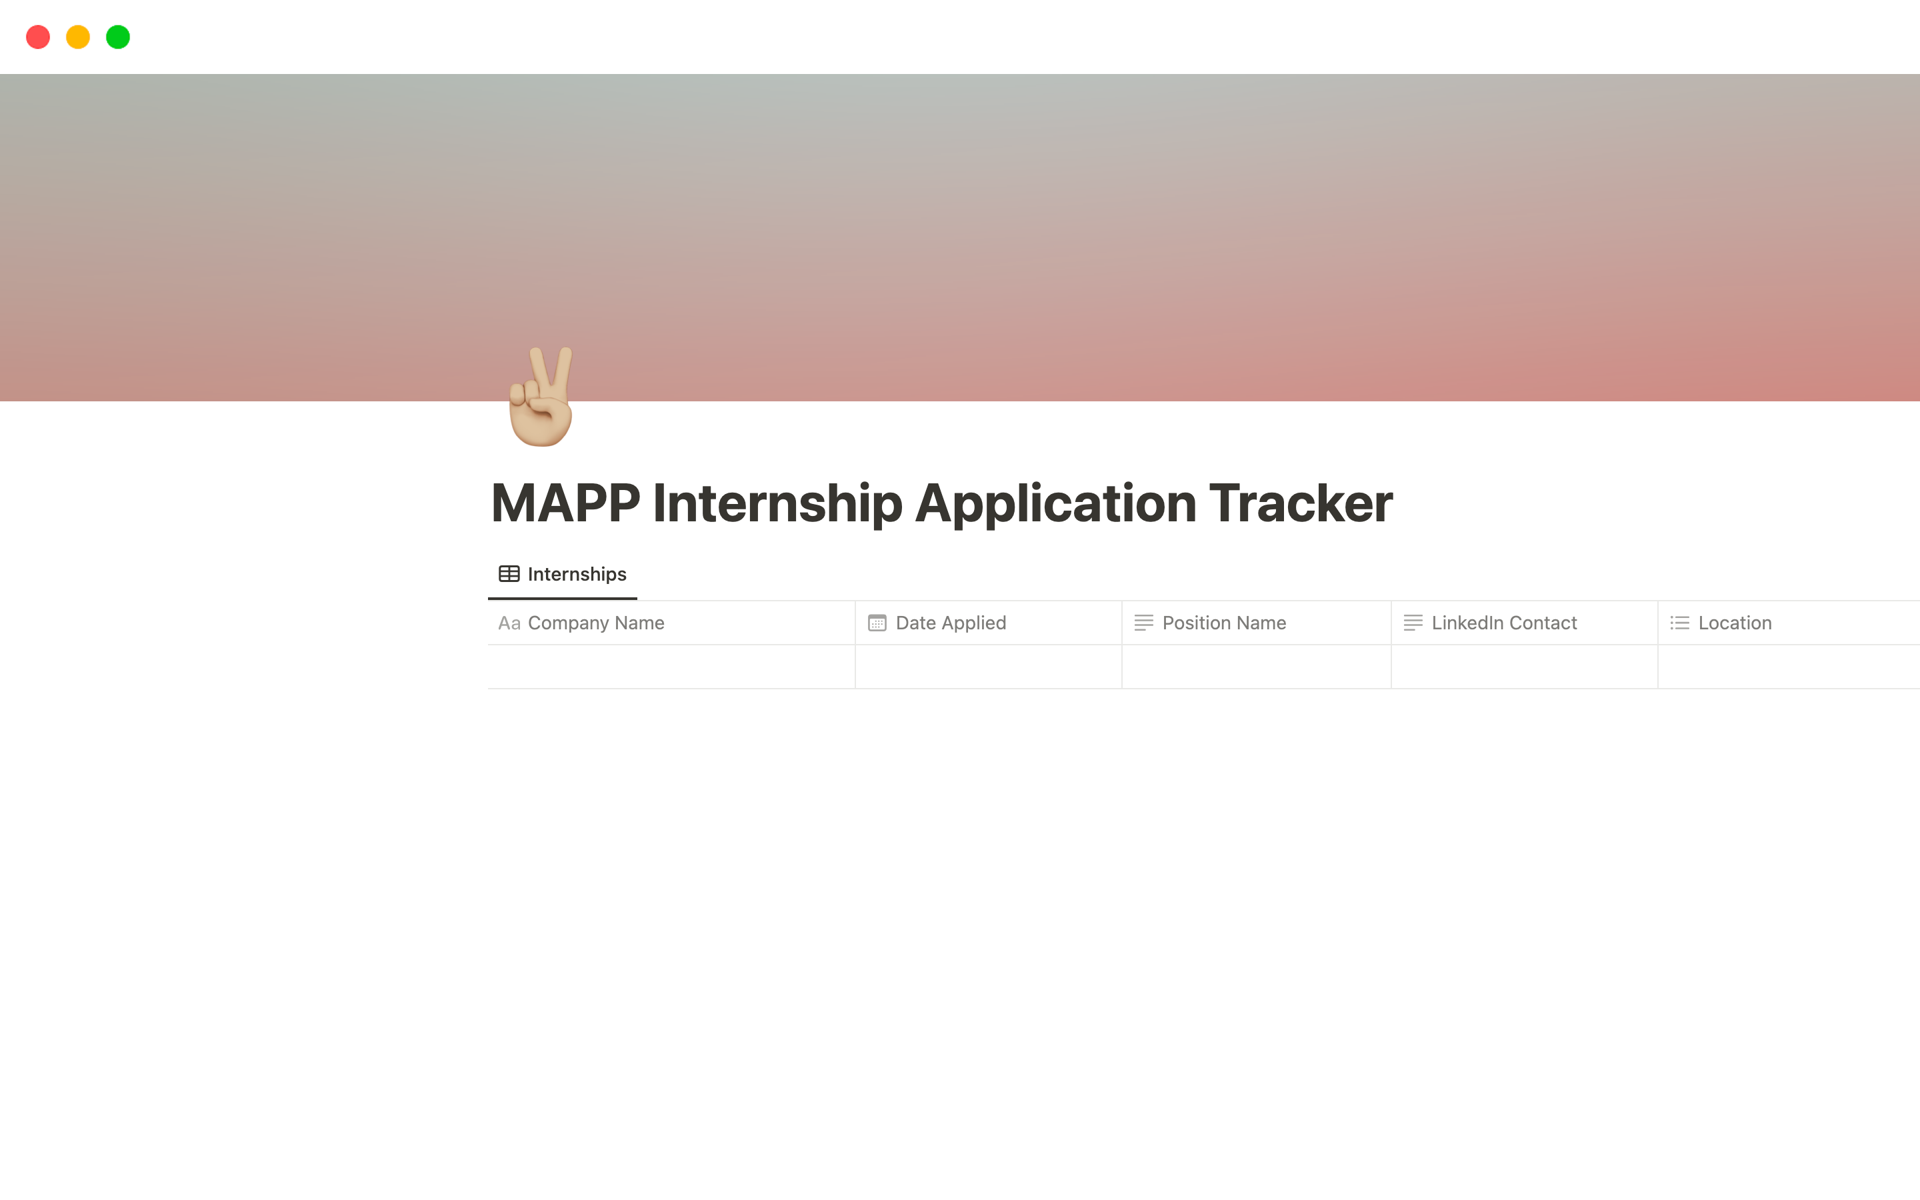 Vista previa de plantilla para MAPP Internship Application Tracker